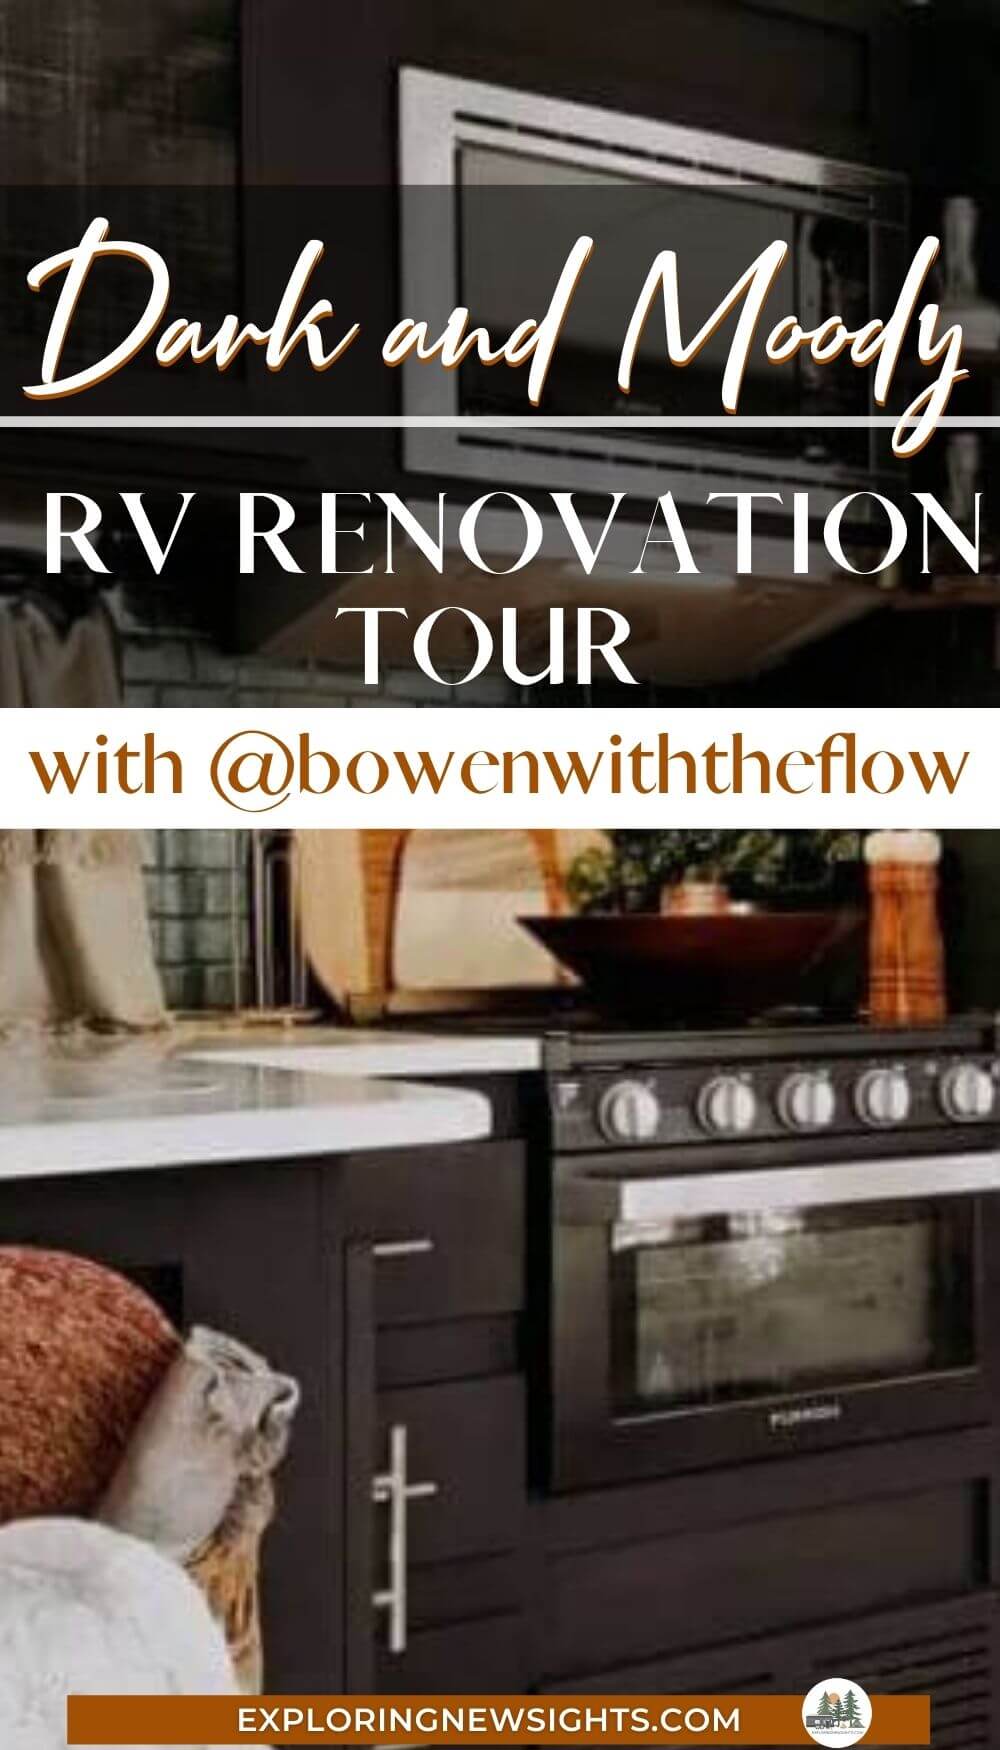 Dark and moody RV renovation tour 